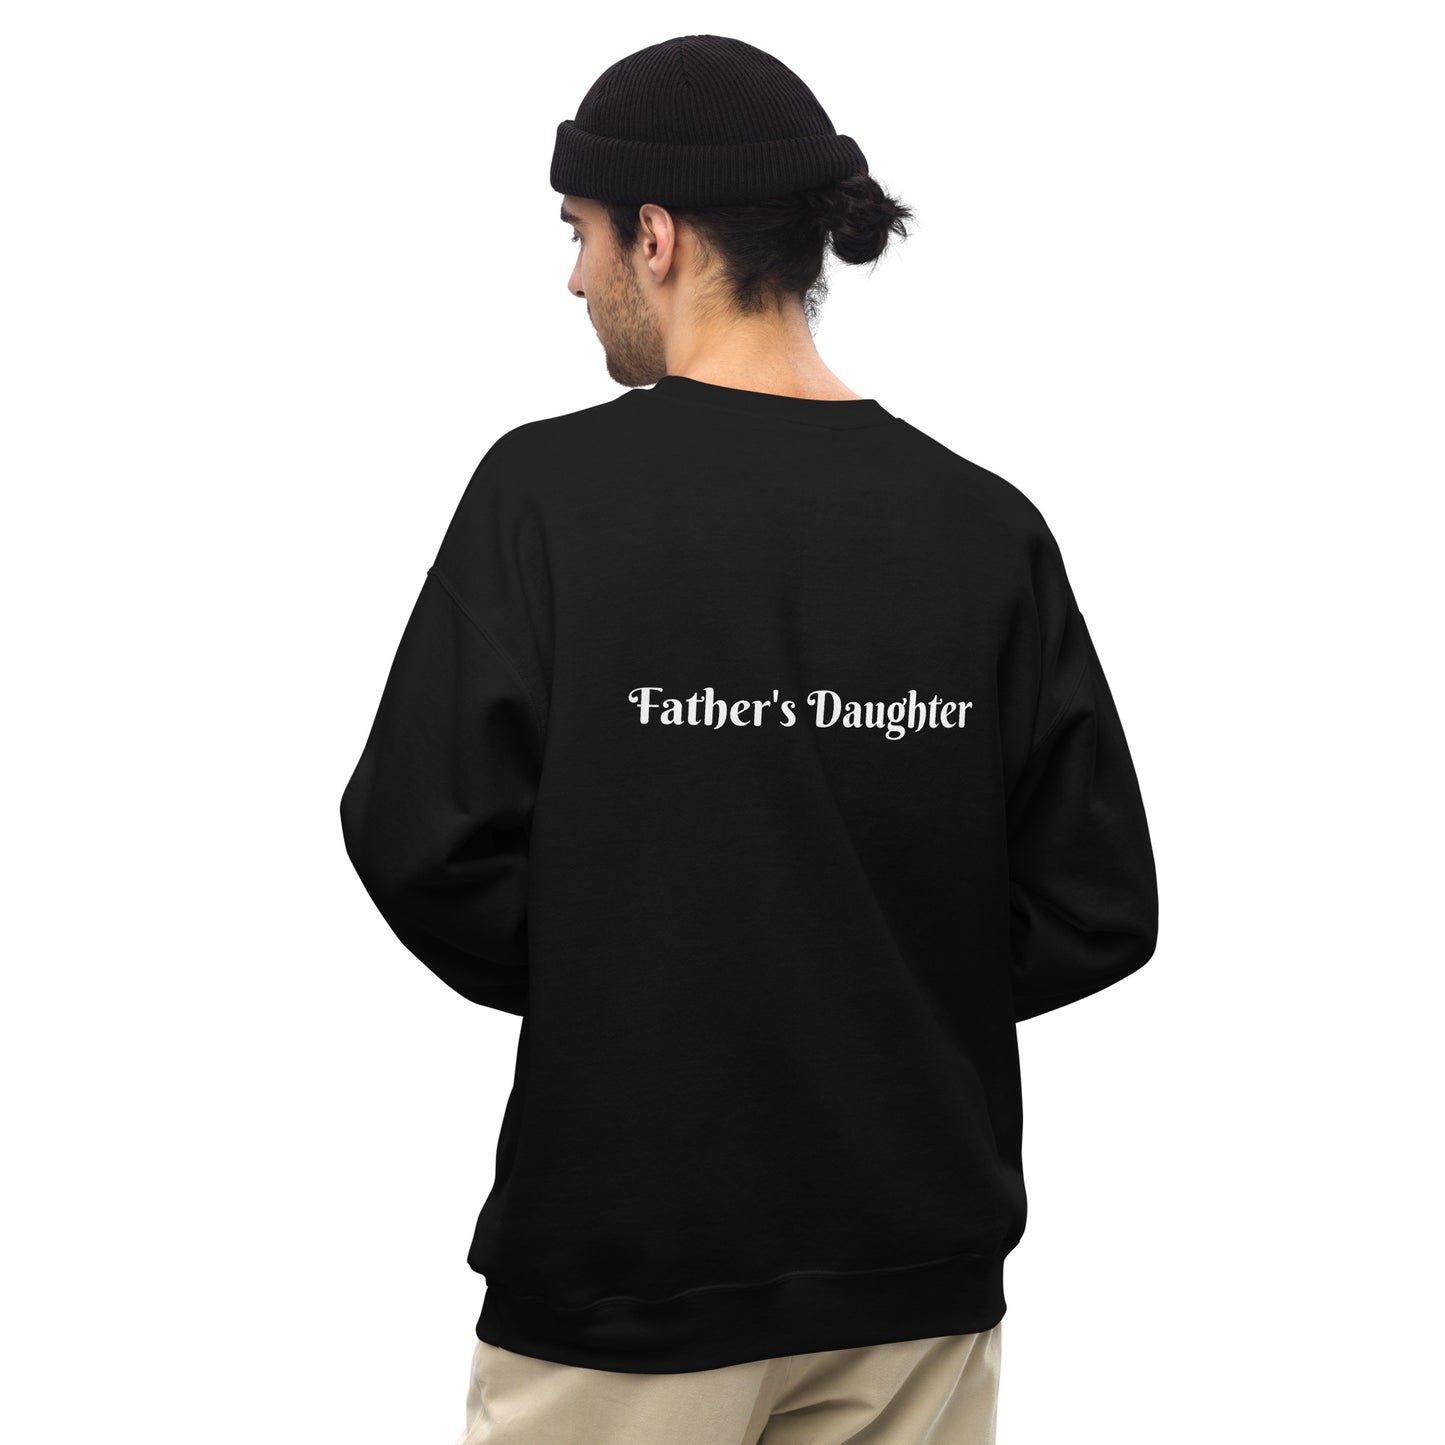 Father's Daughter Sweatshirt